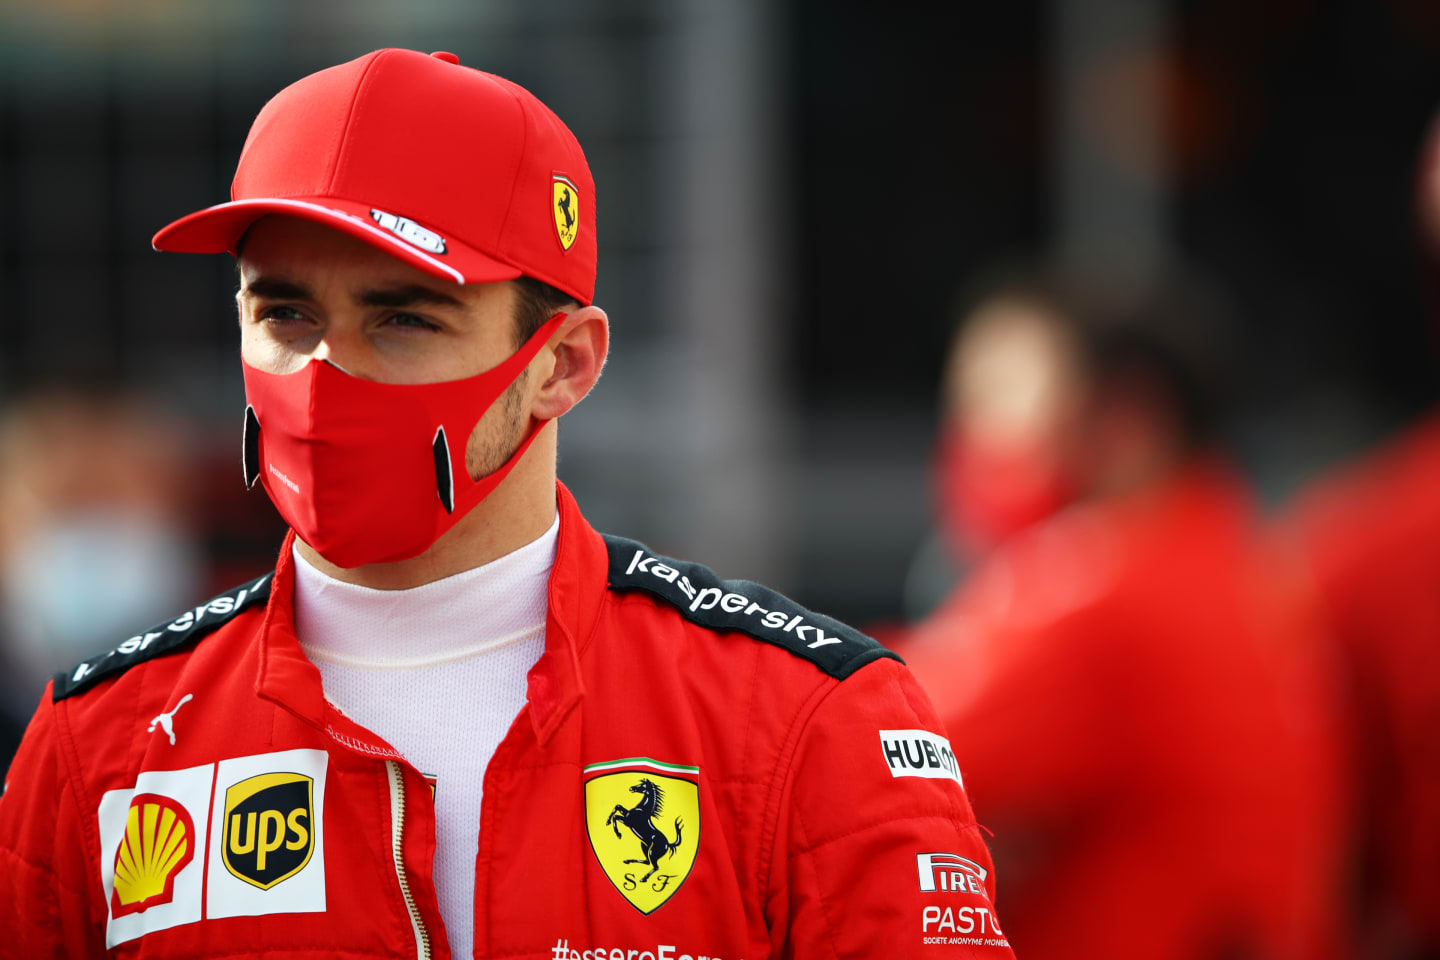 IMOLA, ITALY - NOVEMBER 01: Charles Leclerc of Monaco and Ferrari looks on during the F1 Grand Prix